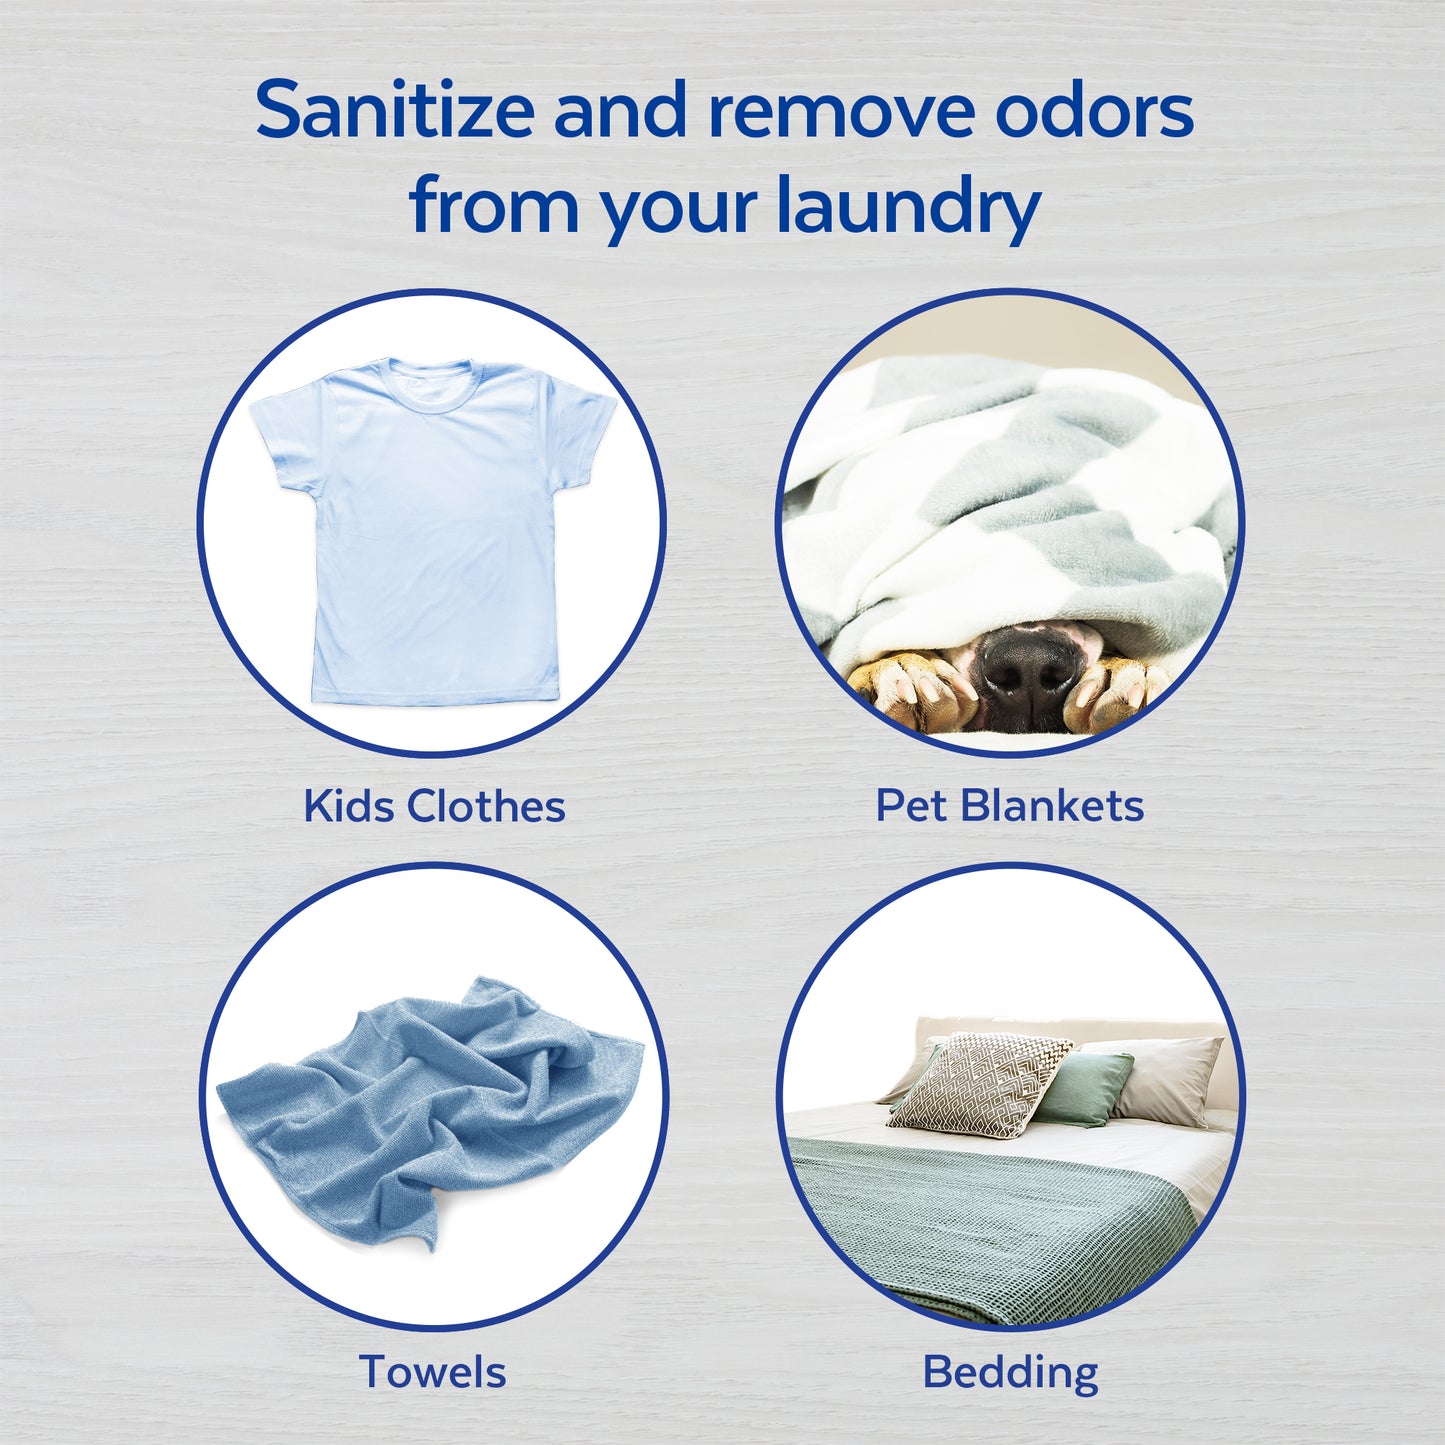 Lysol Laundry Sanitizer Crisp Linen 90 oz Eliminates Odors and Kills Bacteria